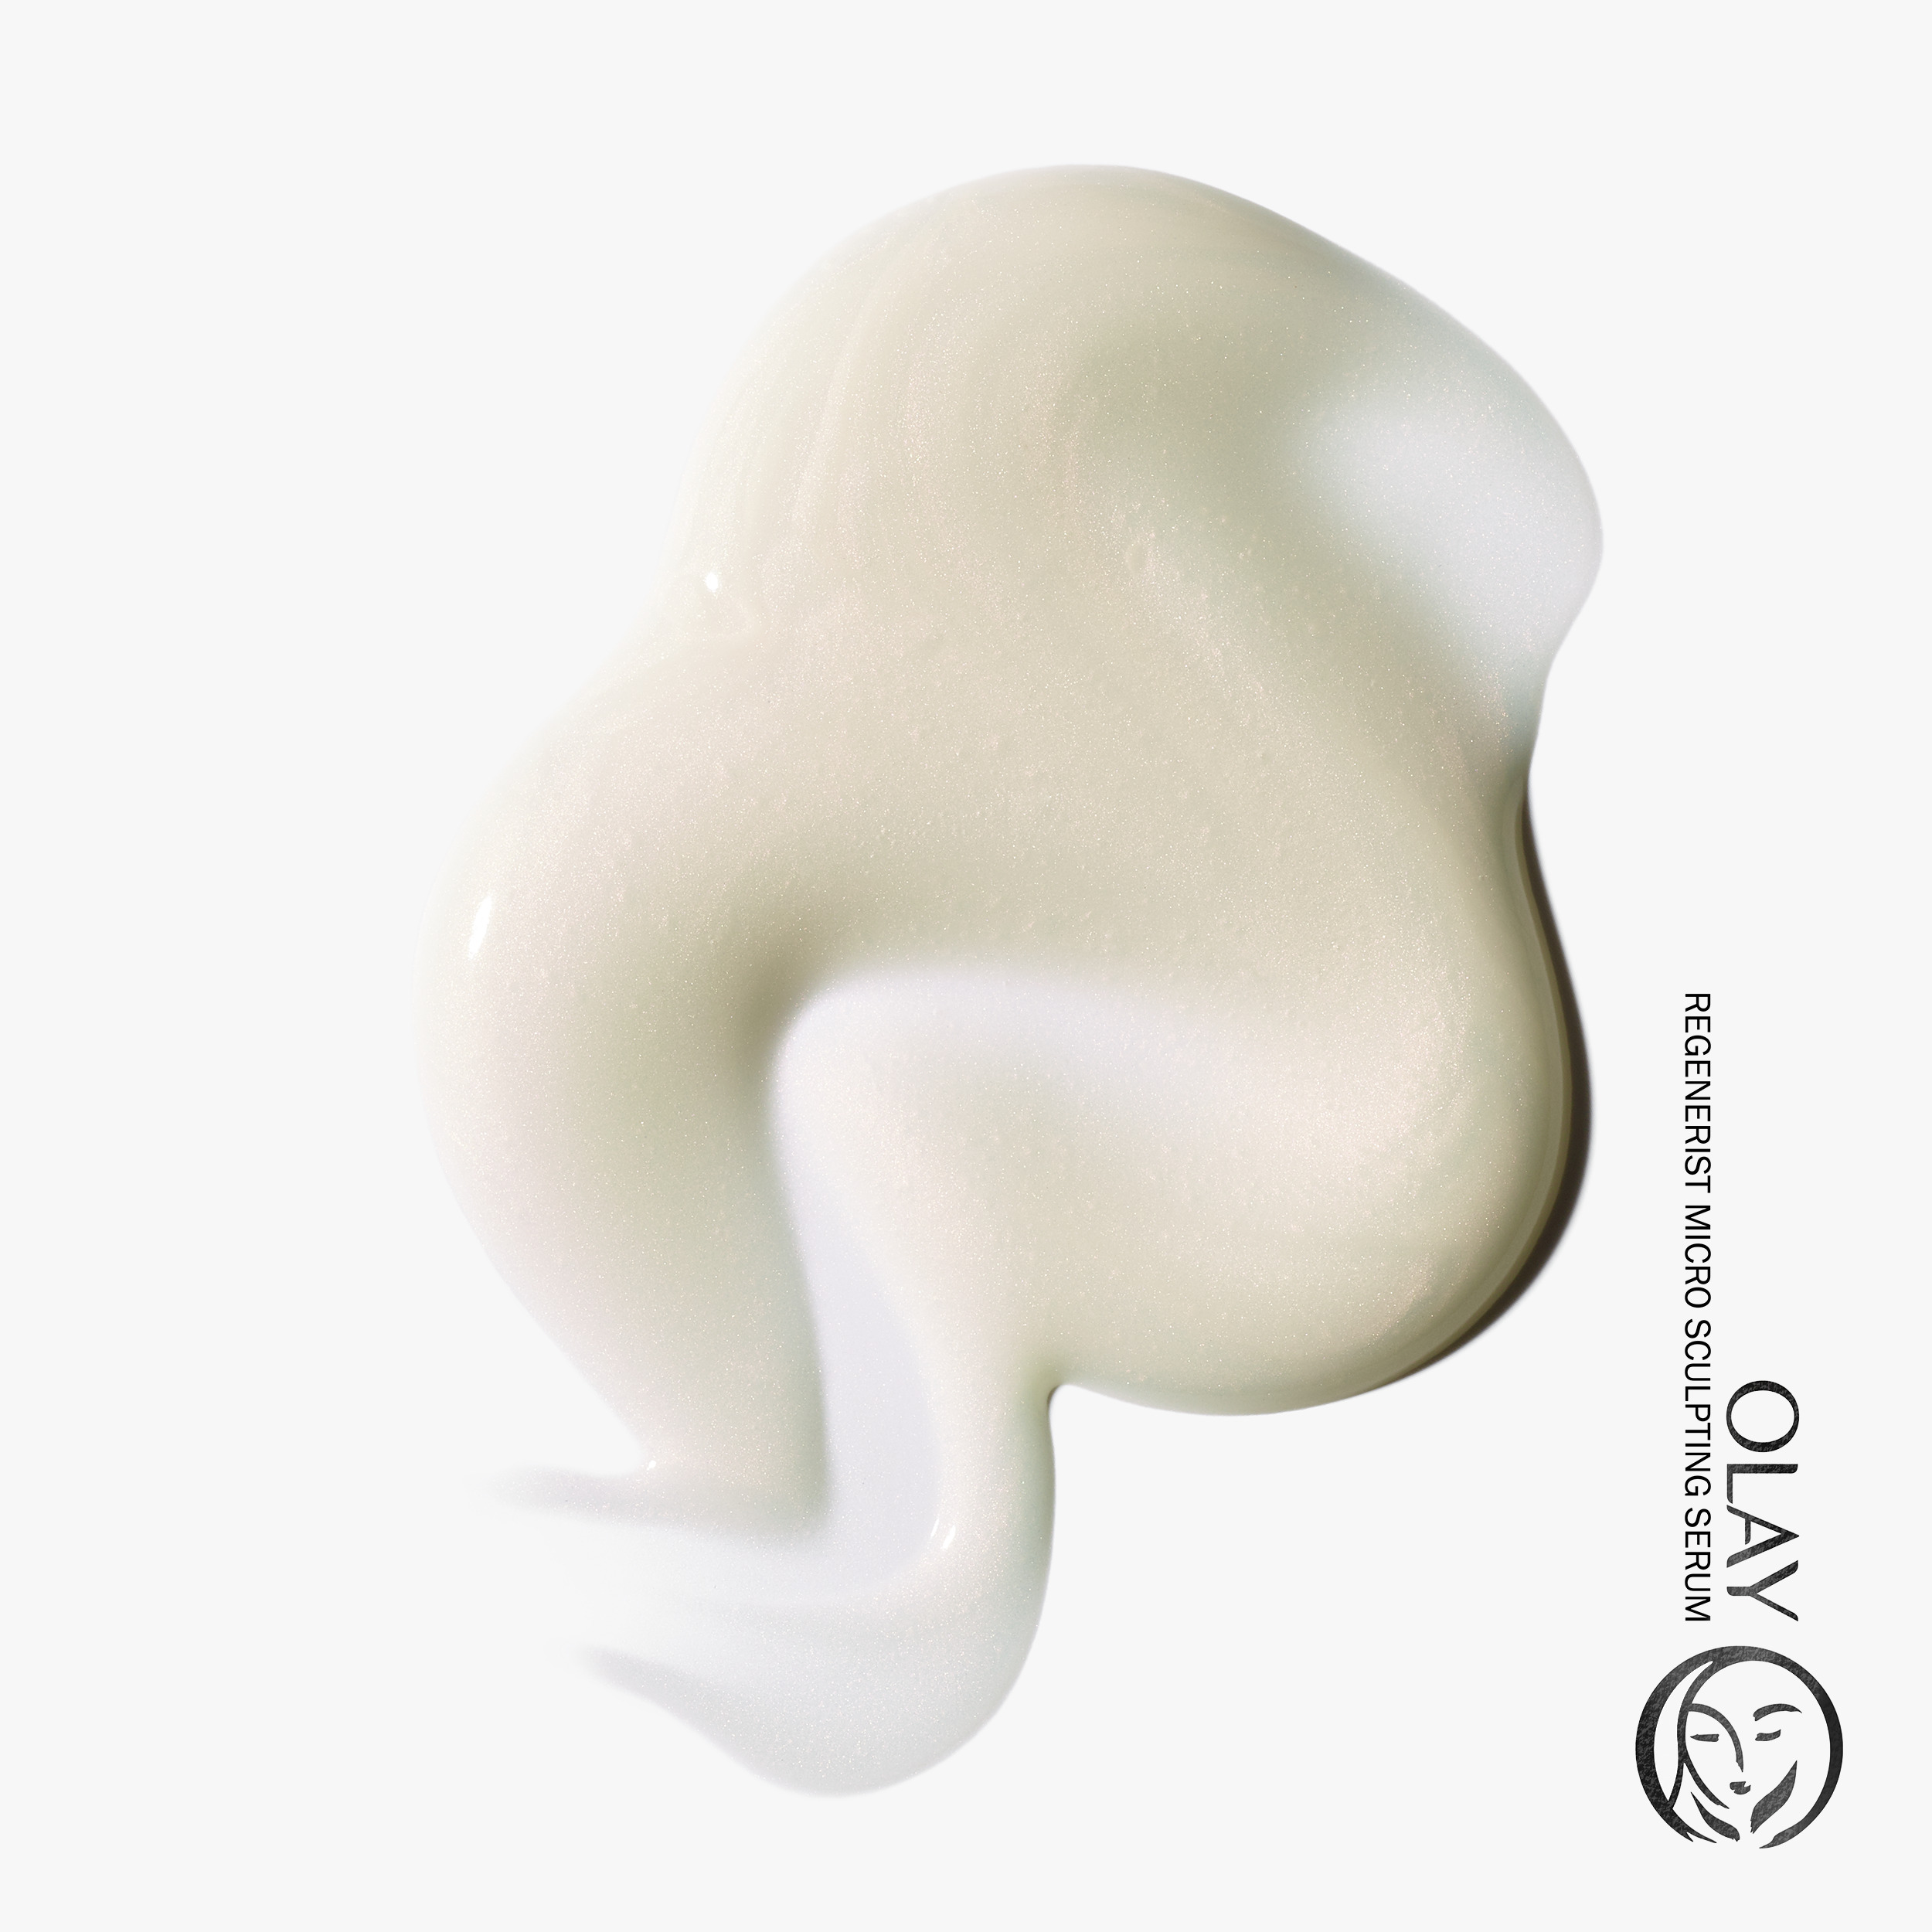 Olay Regenerist Micro-Sculpting Serum, Face Moisturizer, Reduces Fine Lines & Wrinkles, All Skin, 1.7 fl oz - image 3 of 14